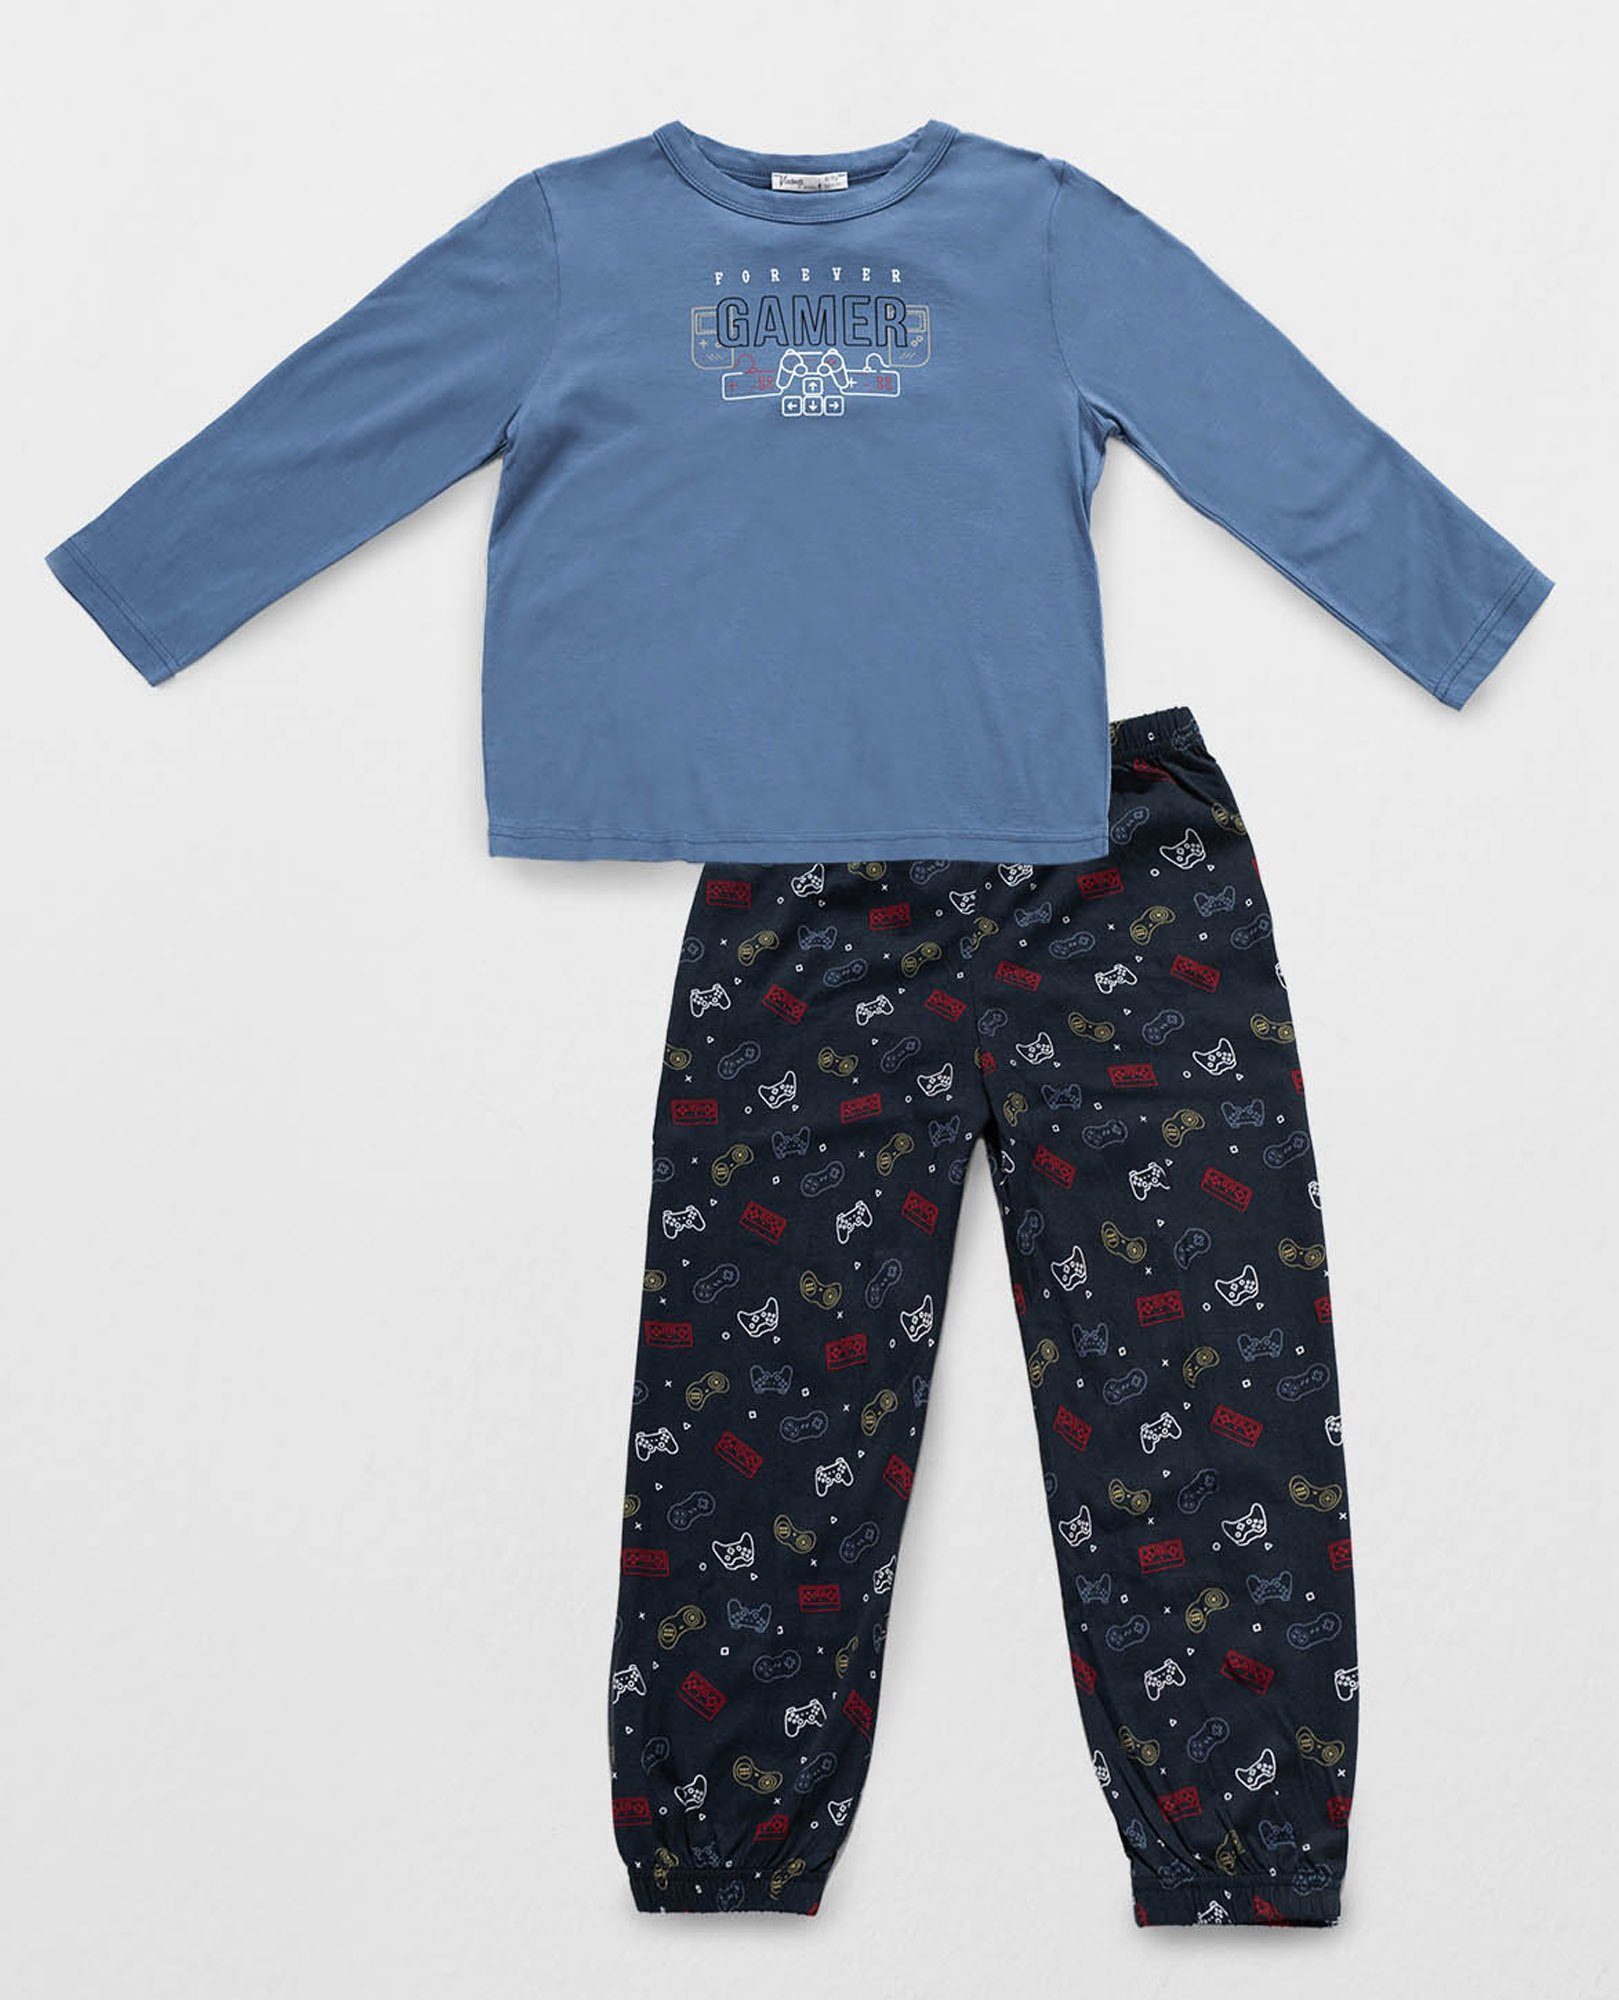 tlg., VAMP Gamer Jungen 2-teilig) 2-teilig Pyjama Schlafanzug Baumwolle kids (Set, Schlafanzug Vamp lang 2